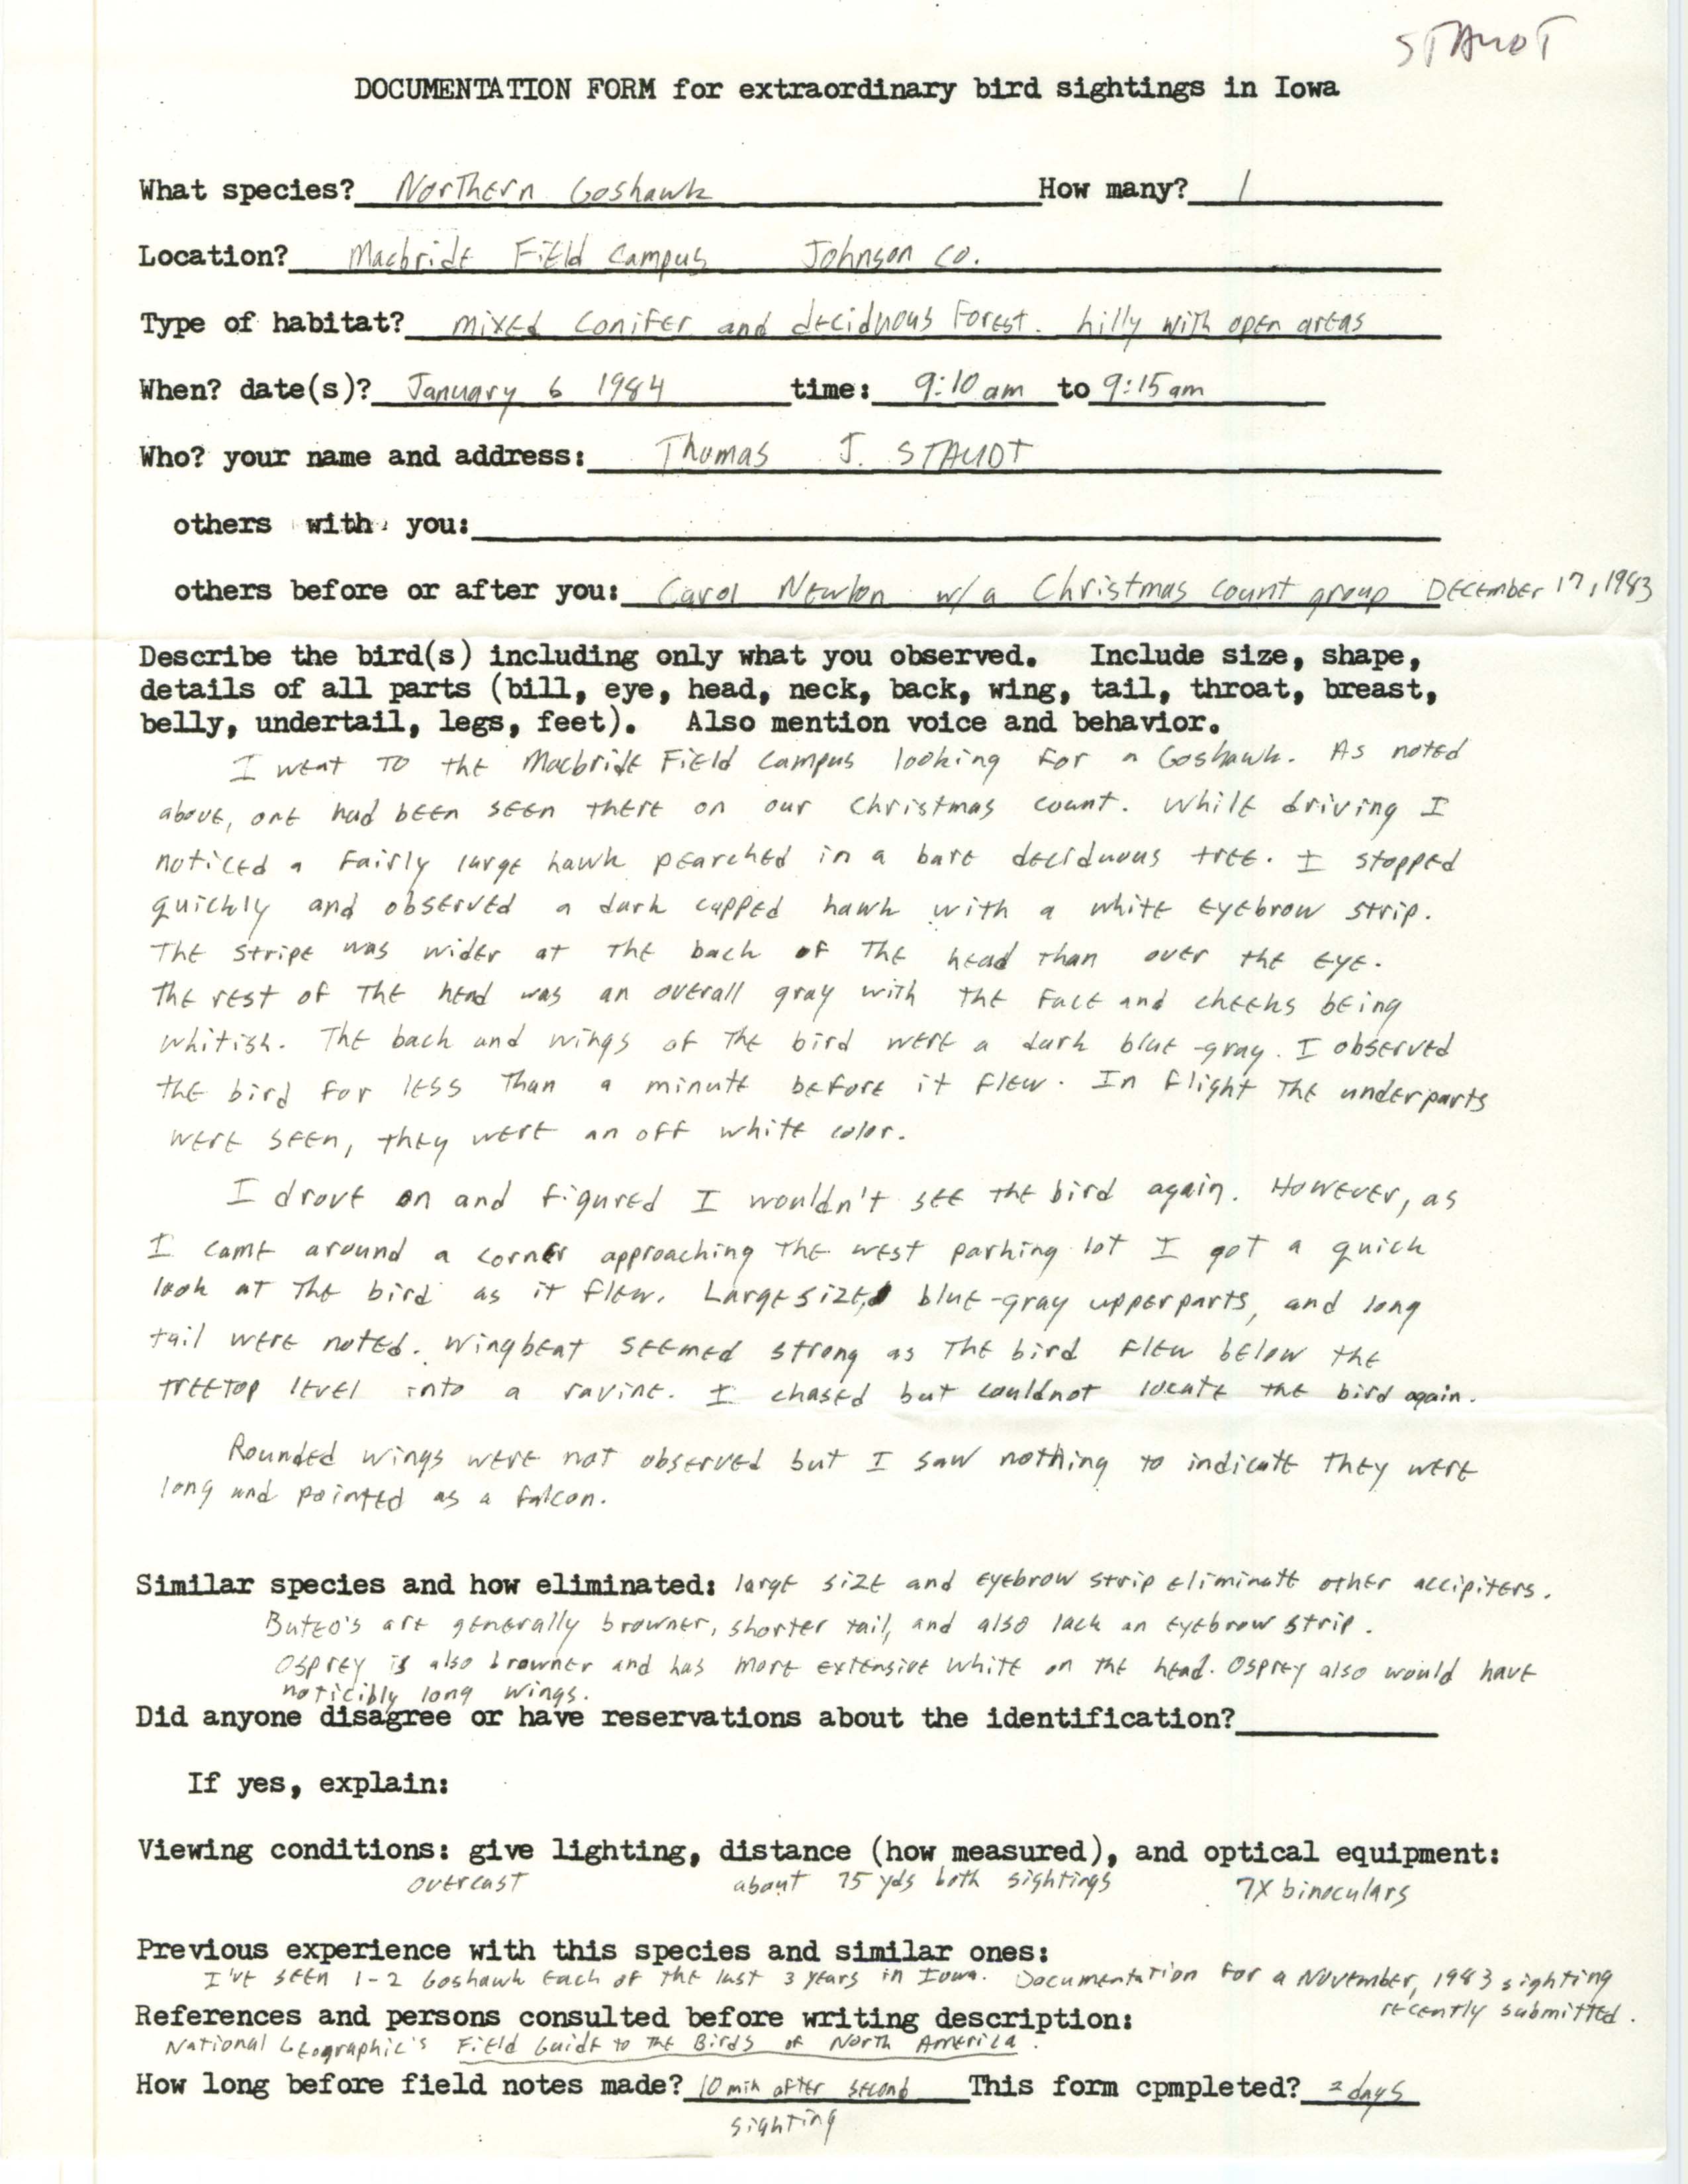 Rare bird documentation form for Northern Goshawk at MacBride Field Campus, 1984